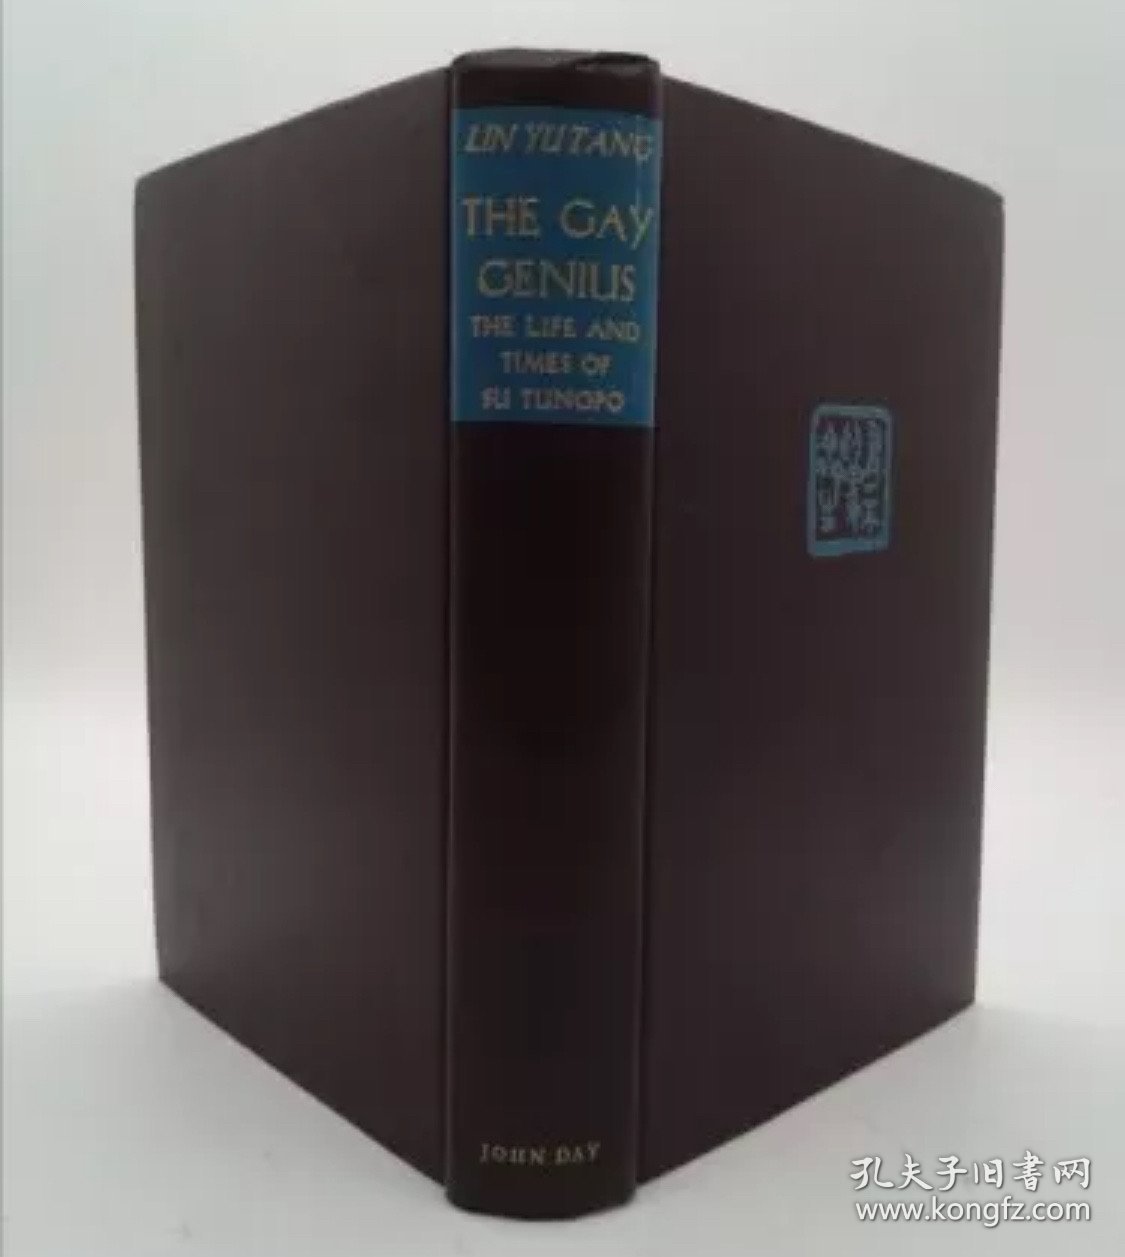 林语堂系列作品15，1947年外文版The Gay Genius: The Life and Times of Su Tungpo《苏东坡传》 内含图，带书衣